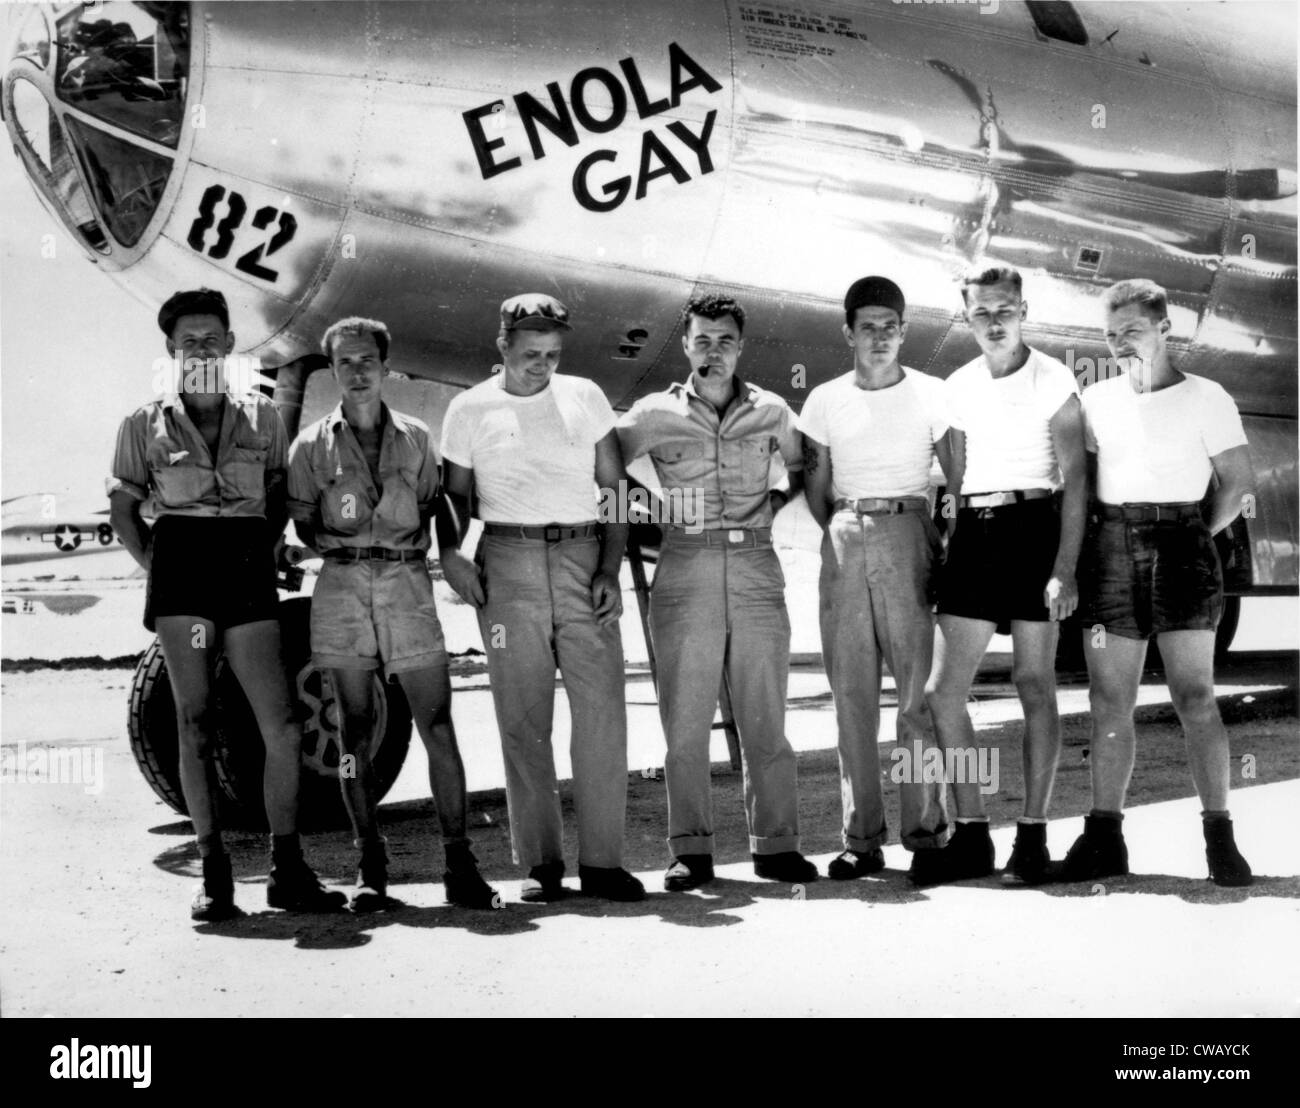 Enola Gay. Das Bodenpersonal des b-29 "Enola Gay" die Atom-Hiroshima, Japan bombardiert. Colonel Paul W. Tibbets, der Pilot ist die Stockfoto